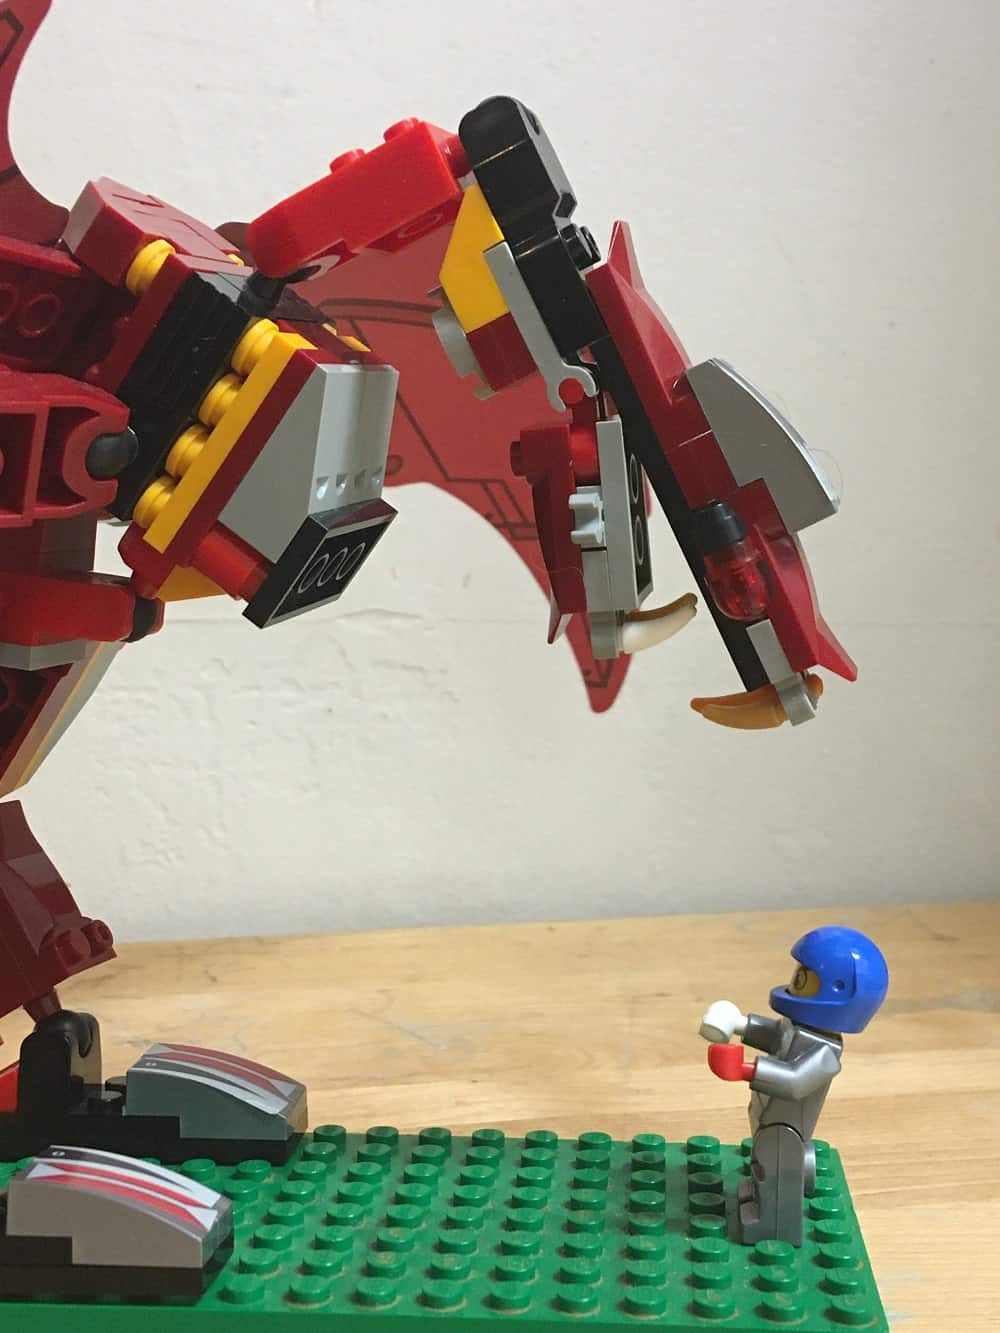 David and Goliath in Lego